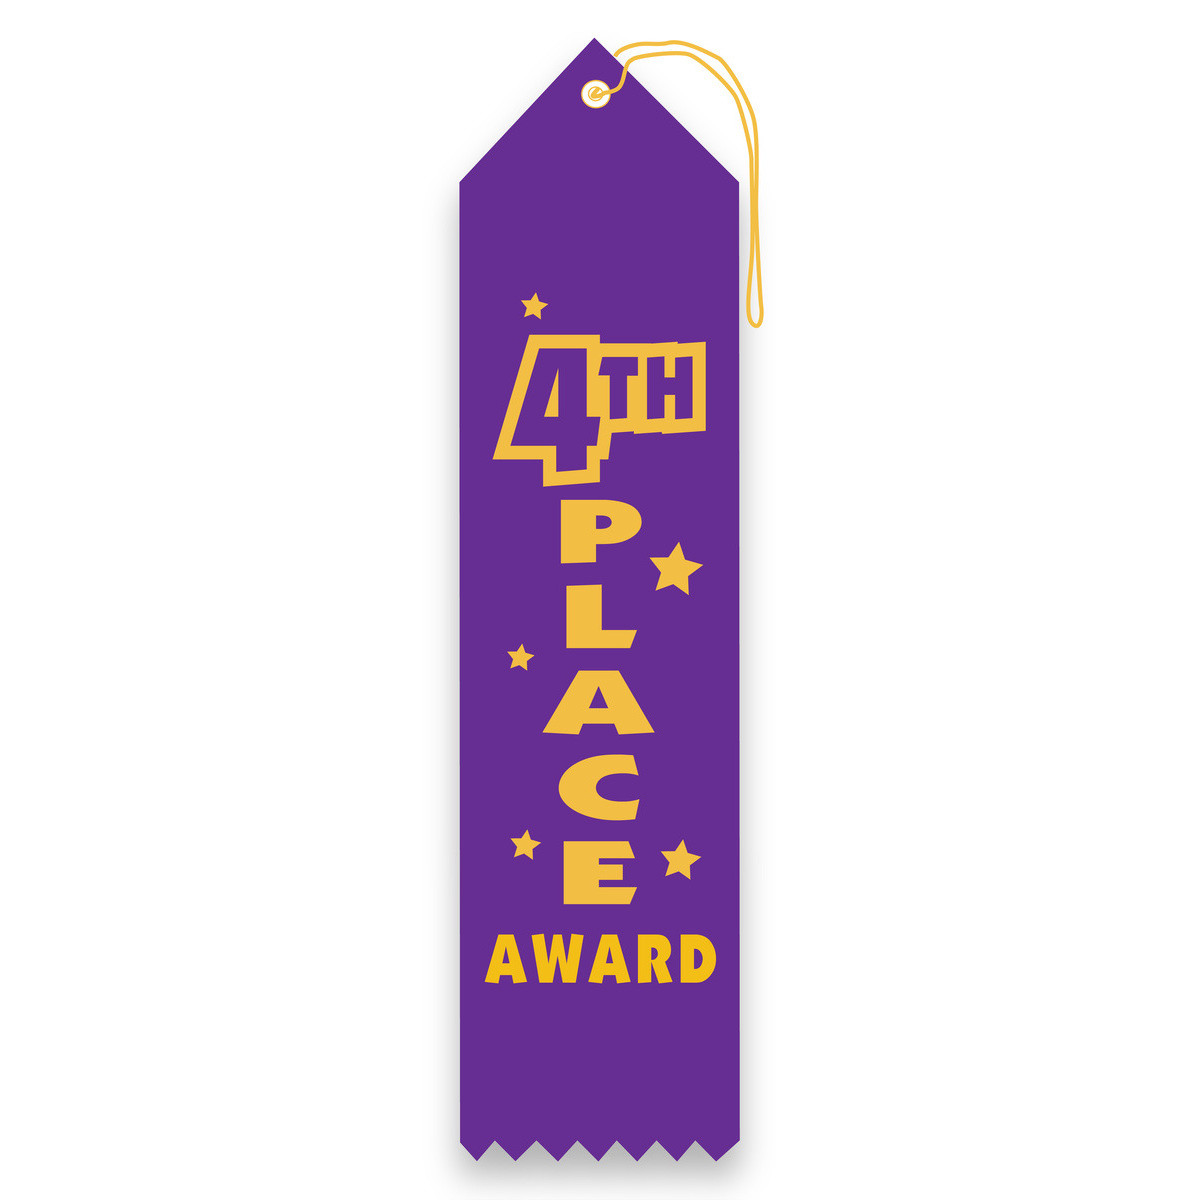 Carded Ribbon - 4th Place Award